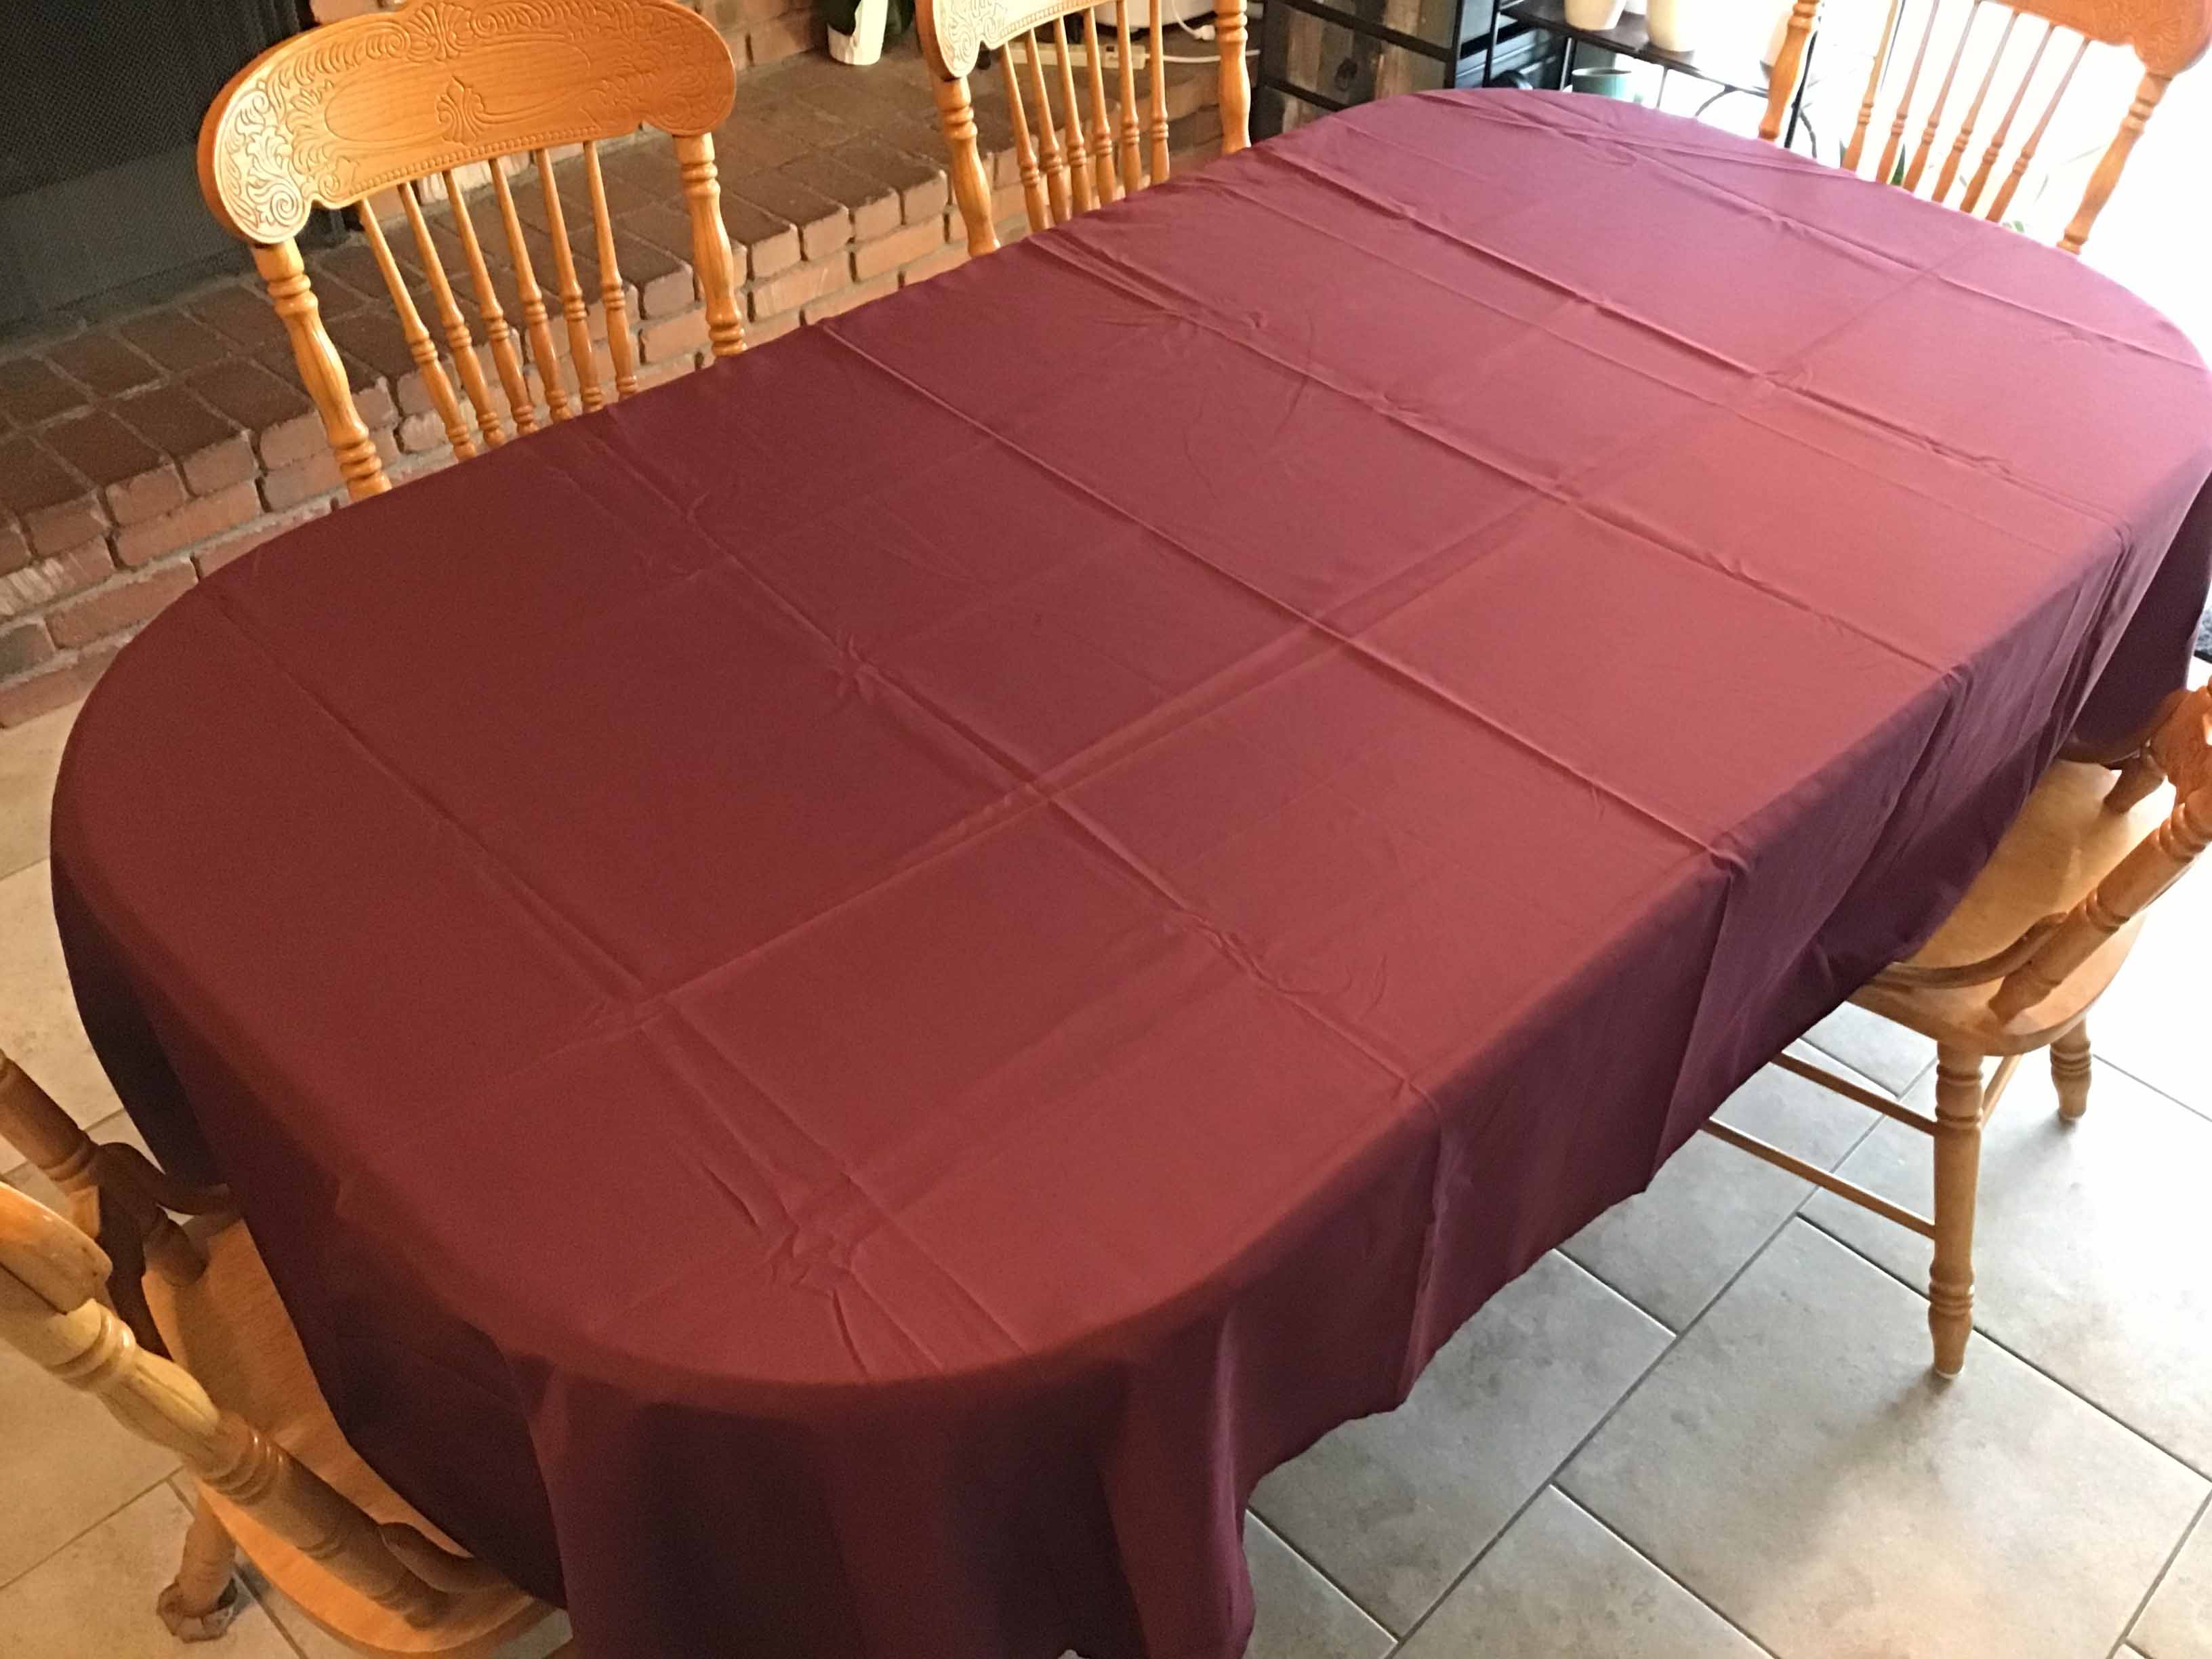 rectangle tablecloths (burgundy) - 60 x 102